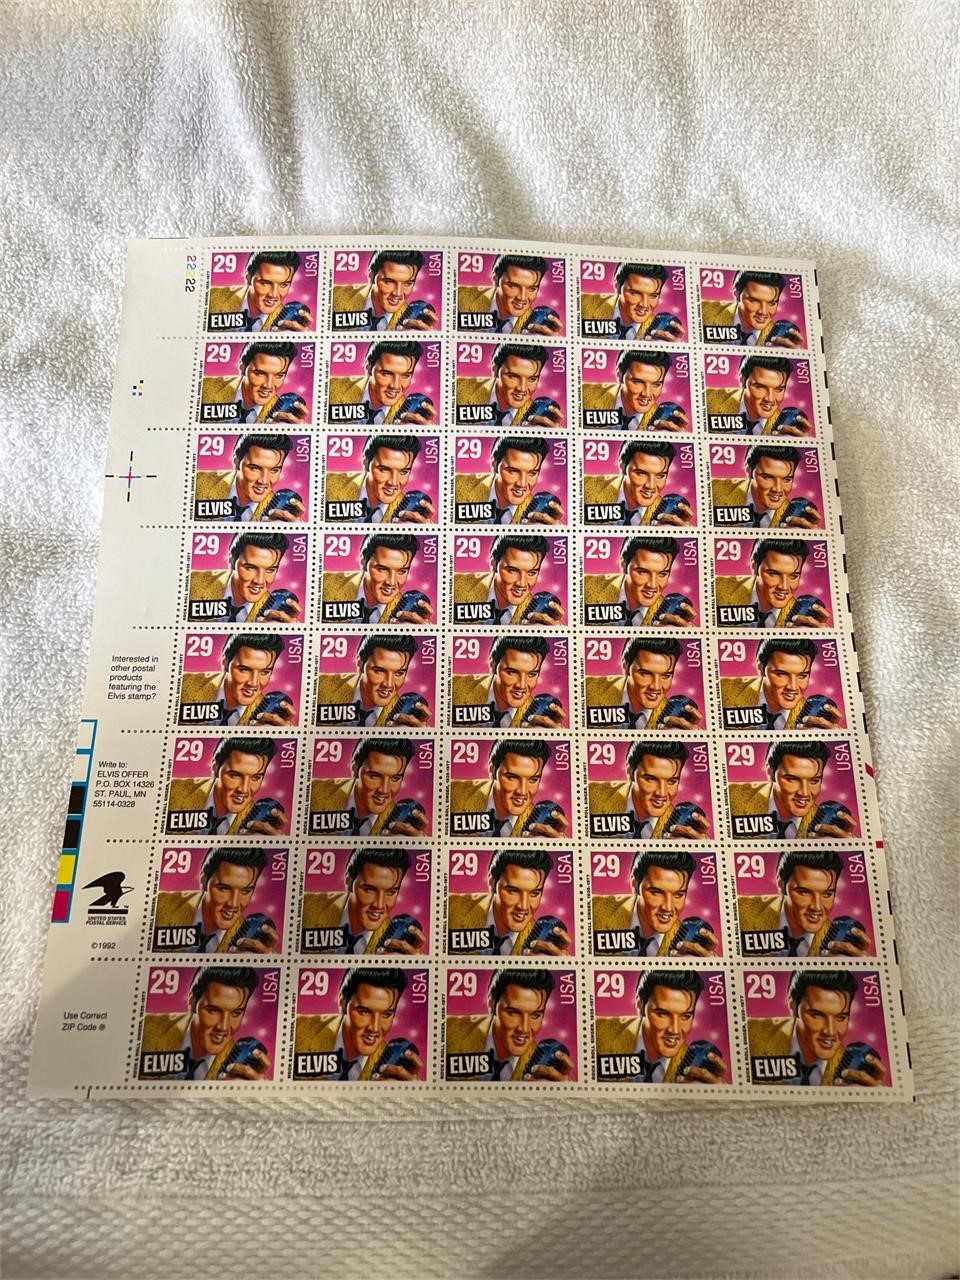 Elvis Presley stamp collection